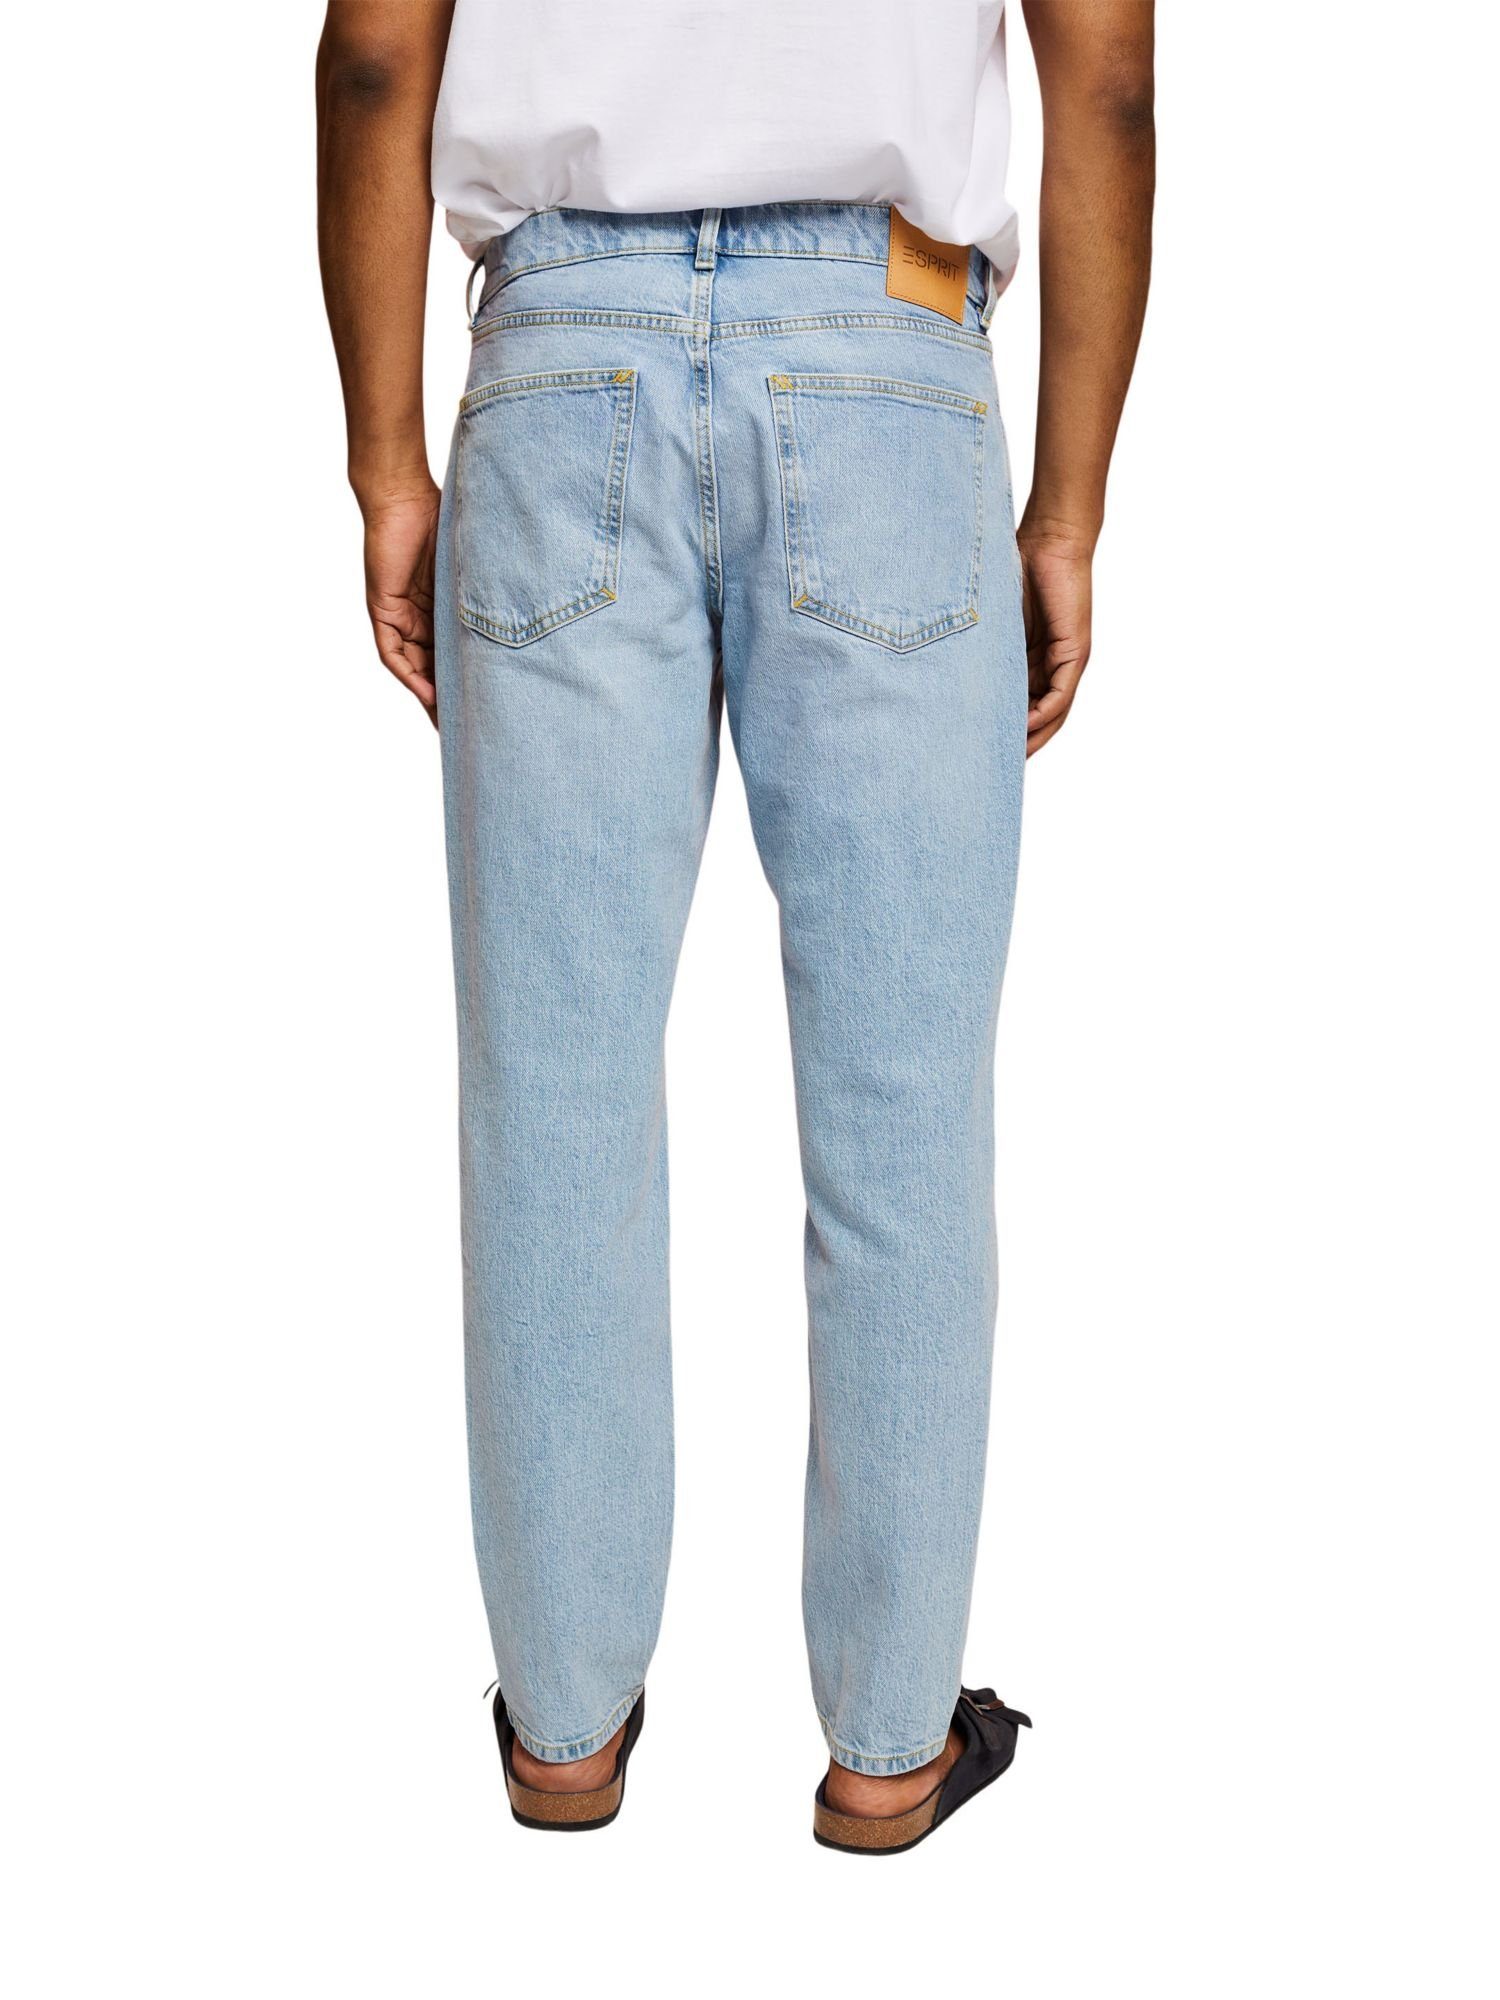 Esprit Jeans Slim-fit-Jeans schmaler Passform in bequemer,